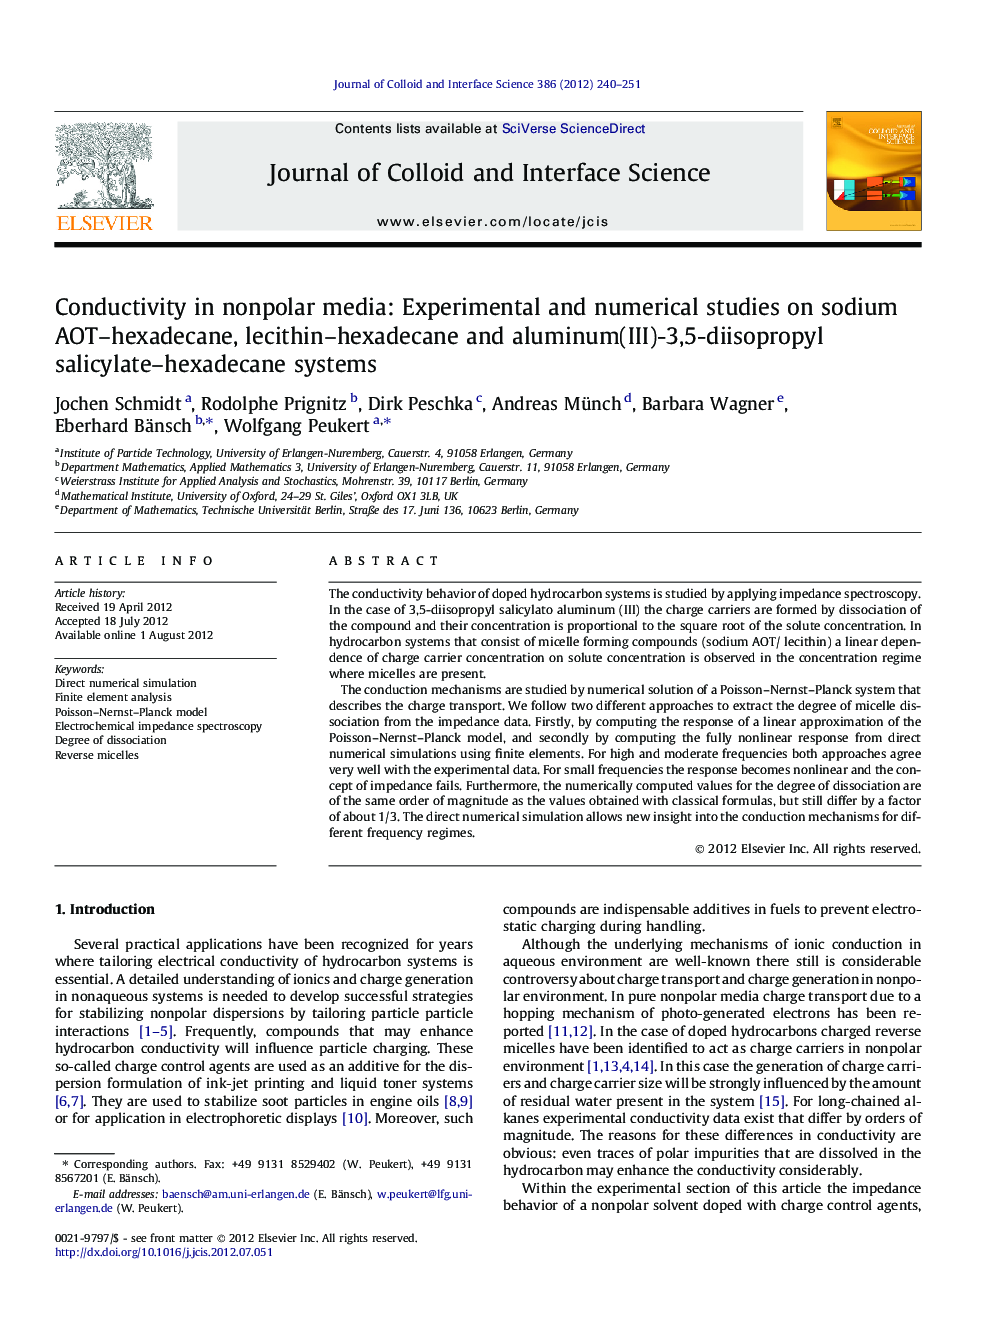 Conductivity in nonpolar media: Experimental and numerical studies on sodium AOT–hexadecane, lecithin–hexadecane and aluminum(III)-3,5-diisopropyl salicylate–hexadecane systems